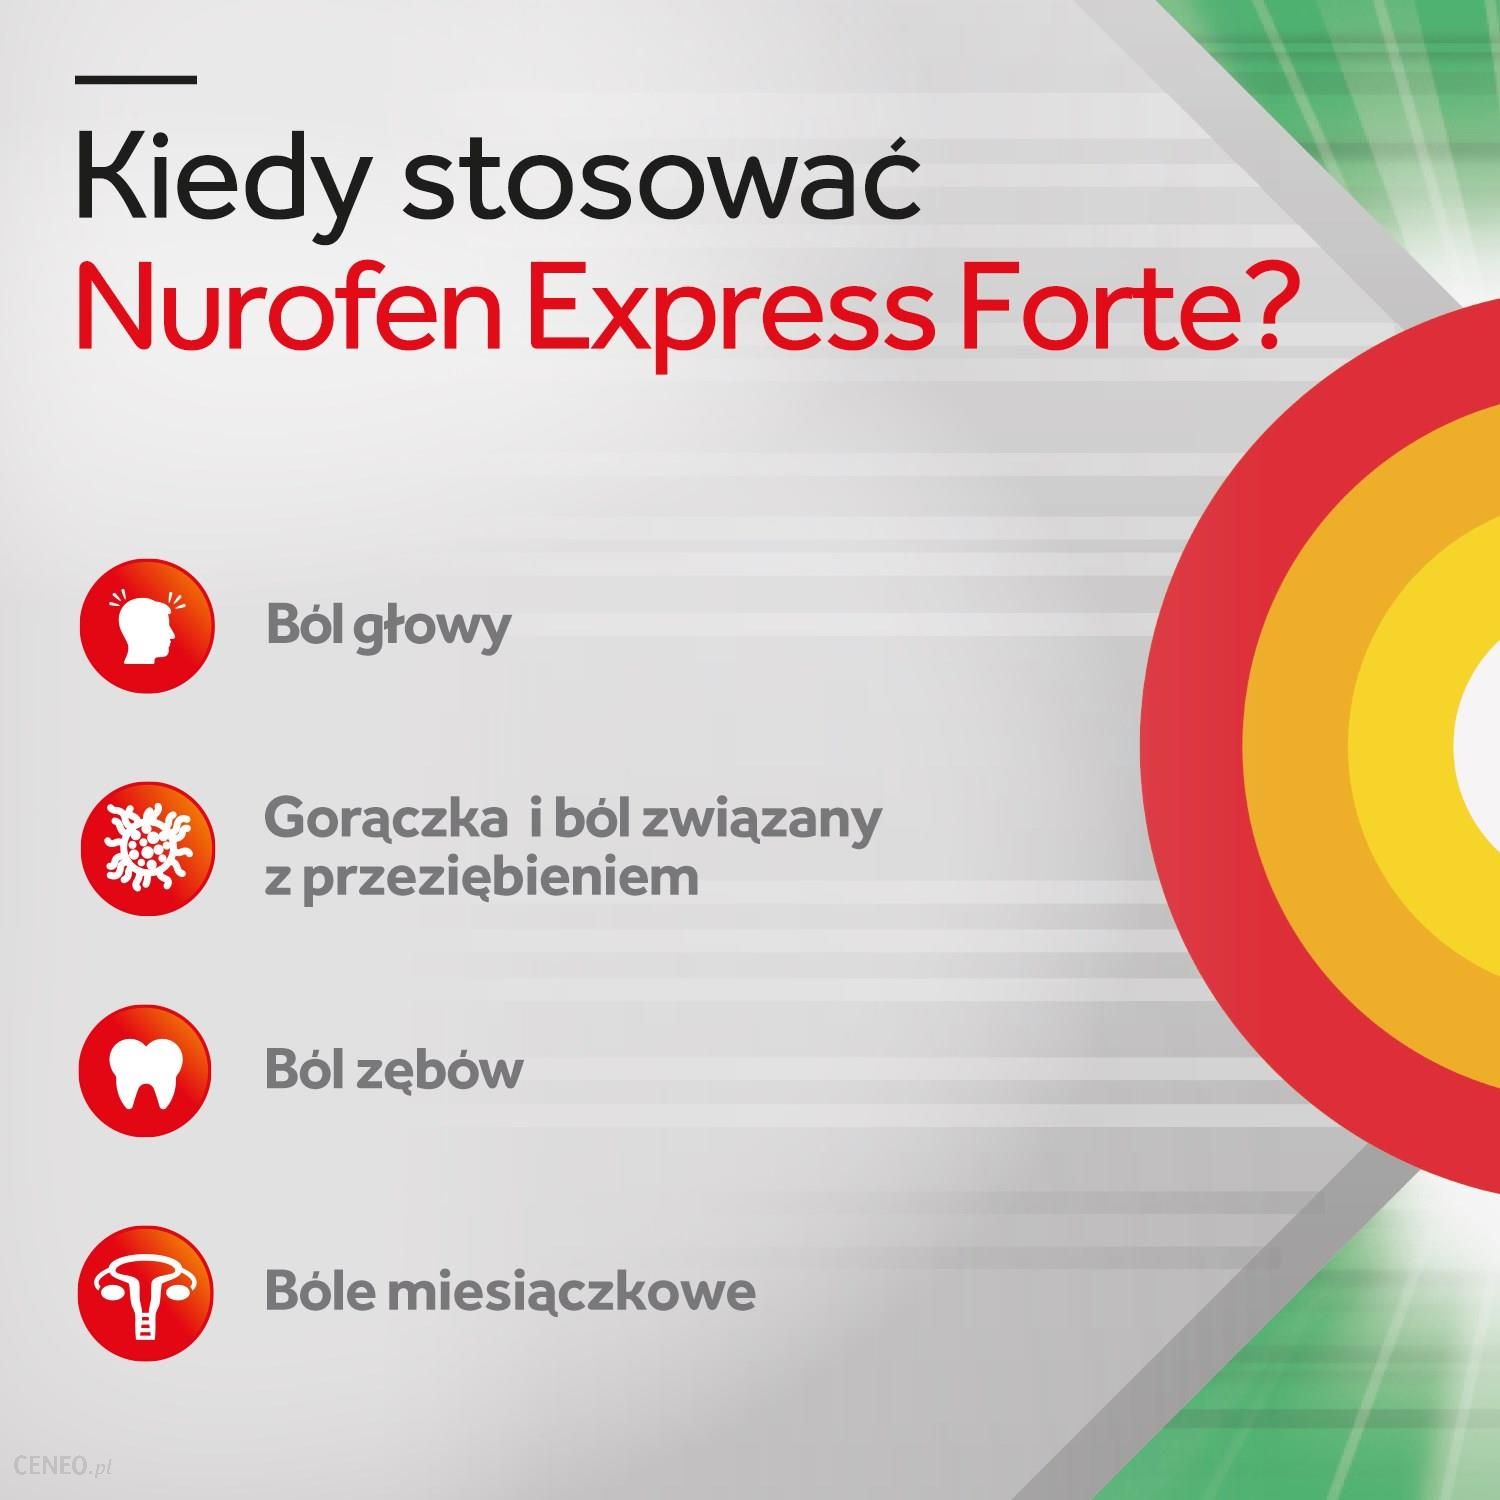 Nurofen Express Forte ibuprofen 400mg 30 kapsułek leki przeciwbólowe